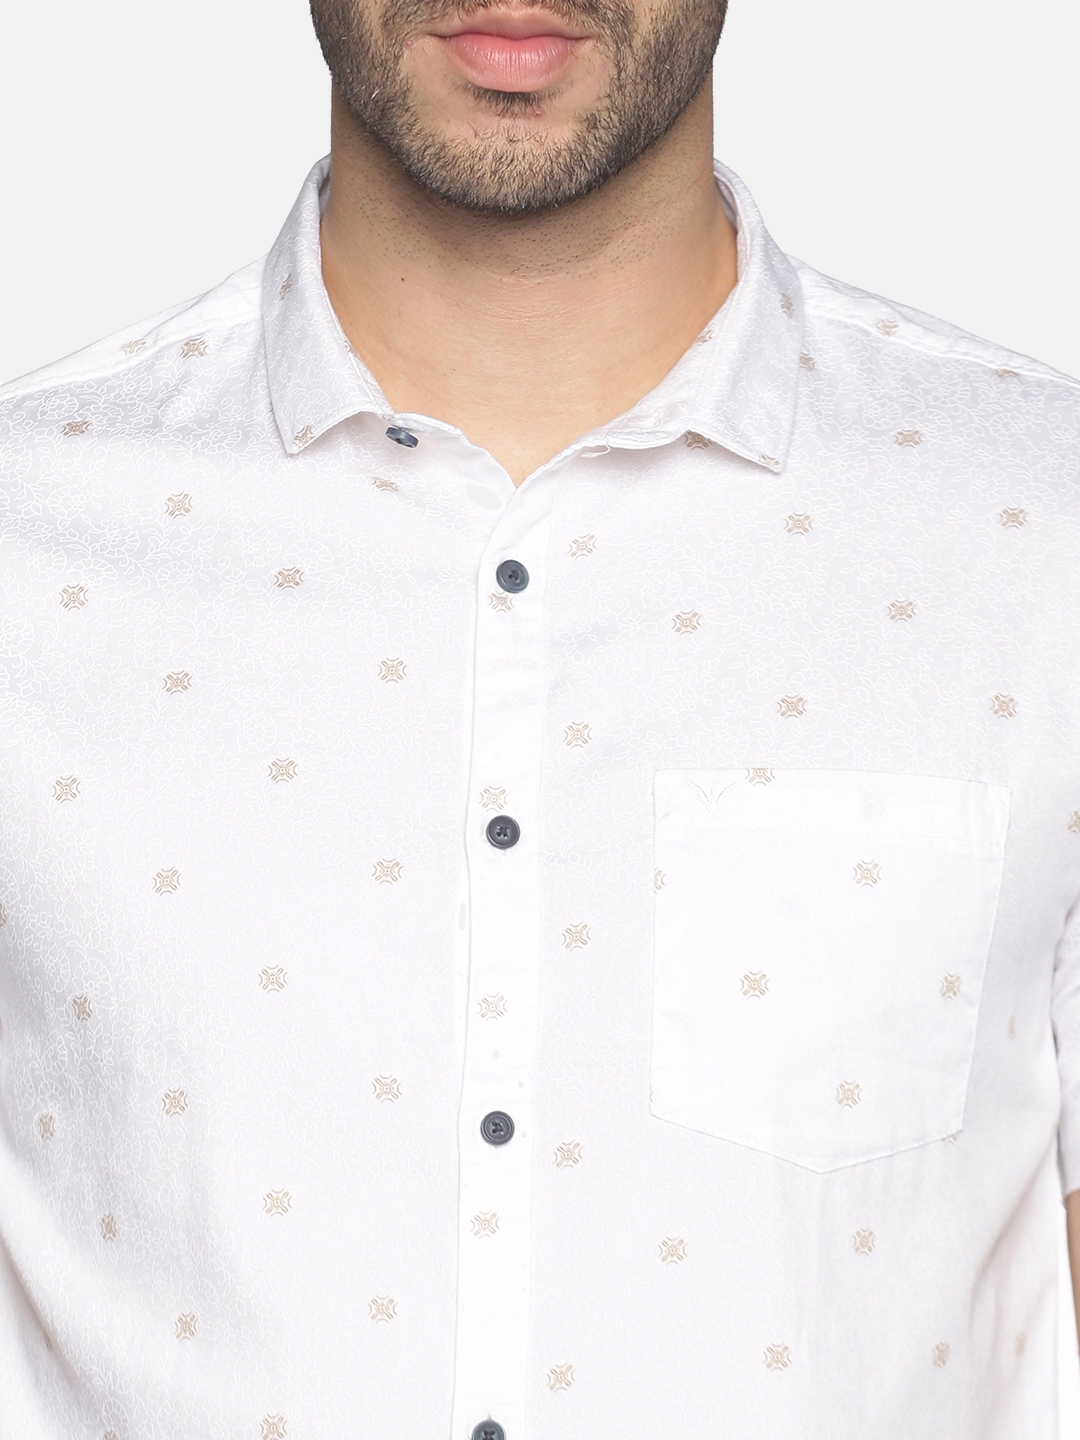 Men's White Cotton Floral Casual Shirts